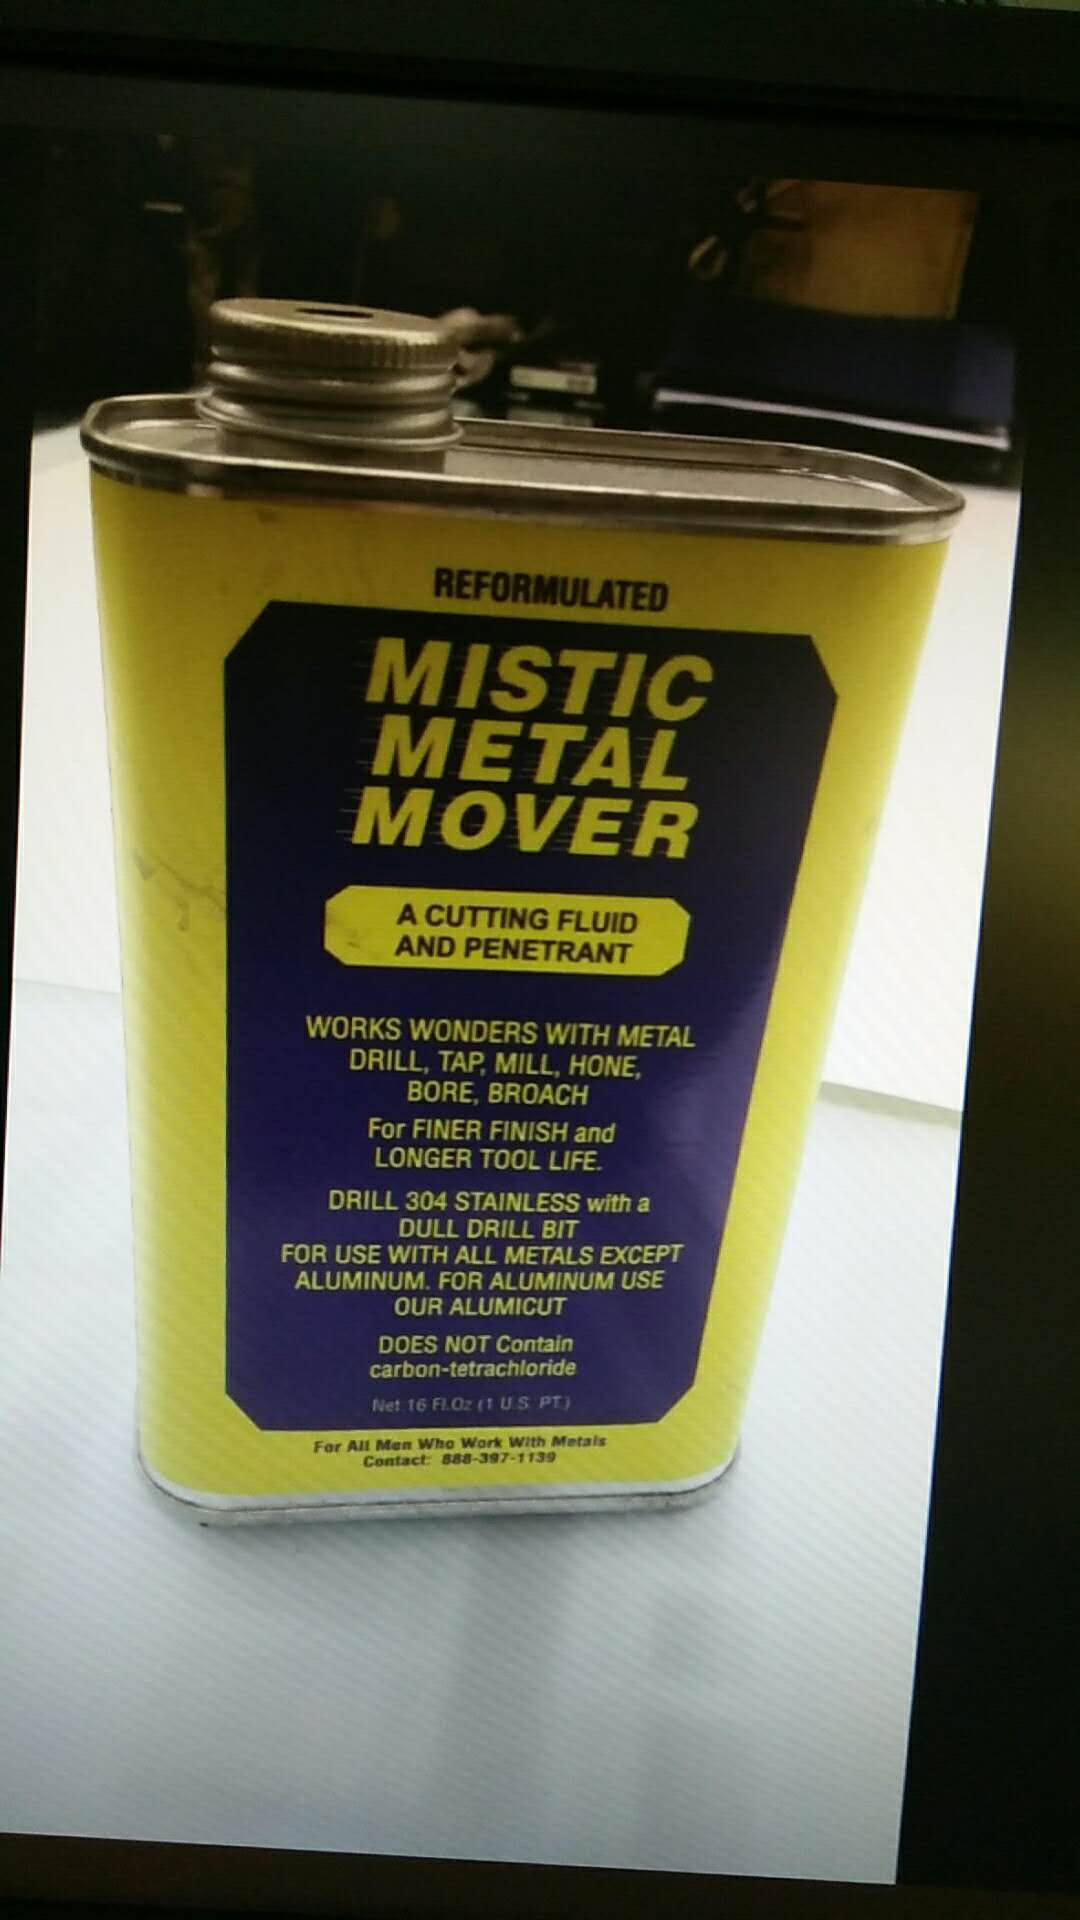 Mistic Metal Mover II Һ